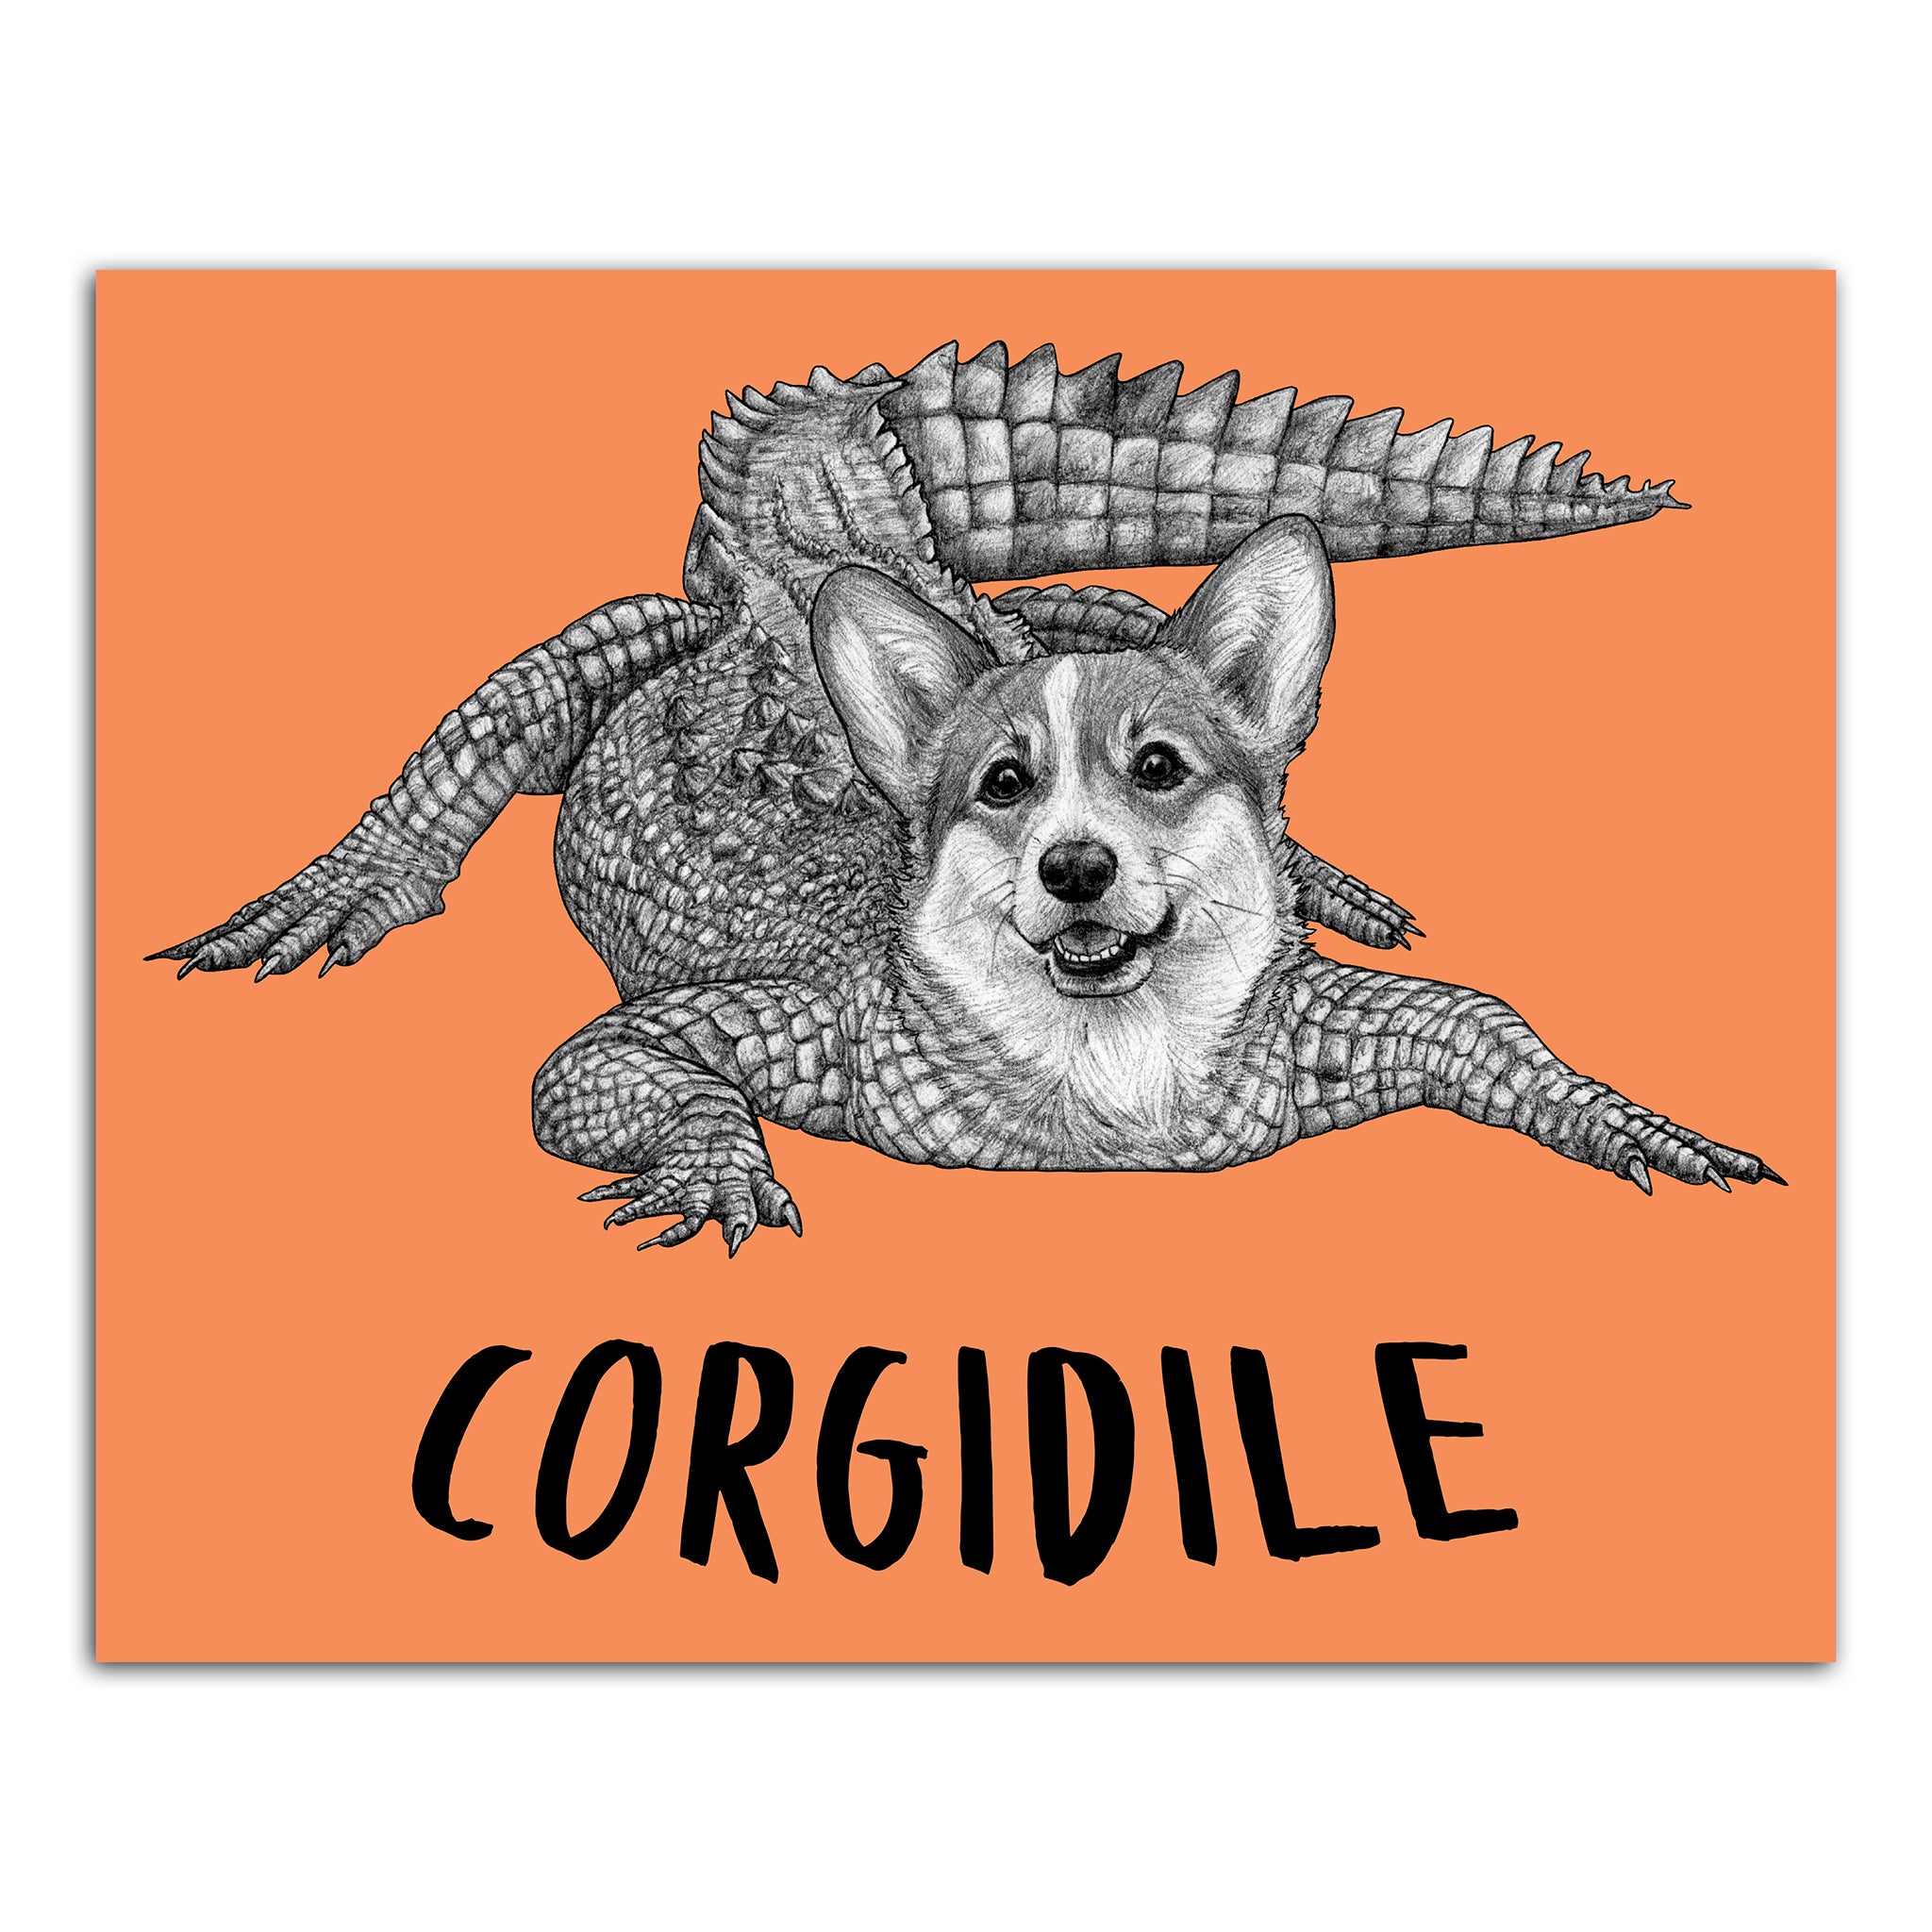 Corgidile 8x10" Art Print